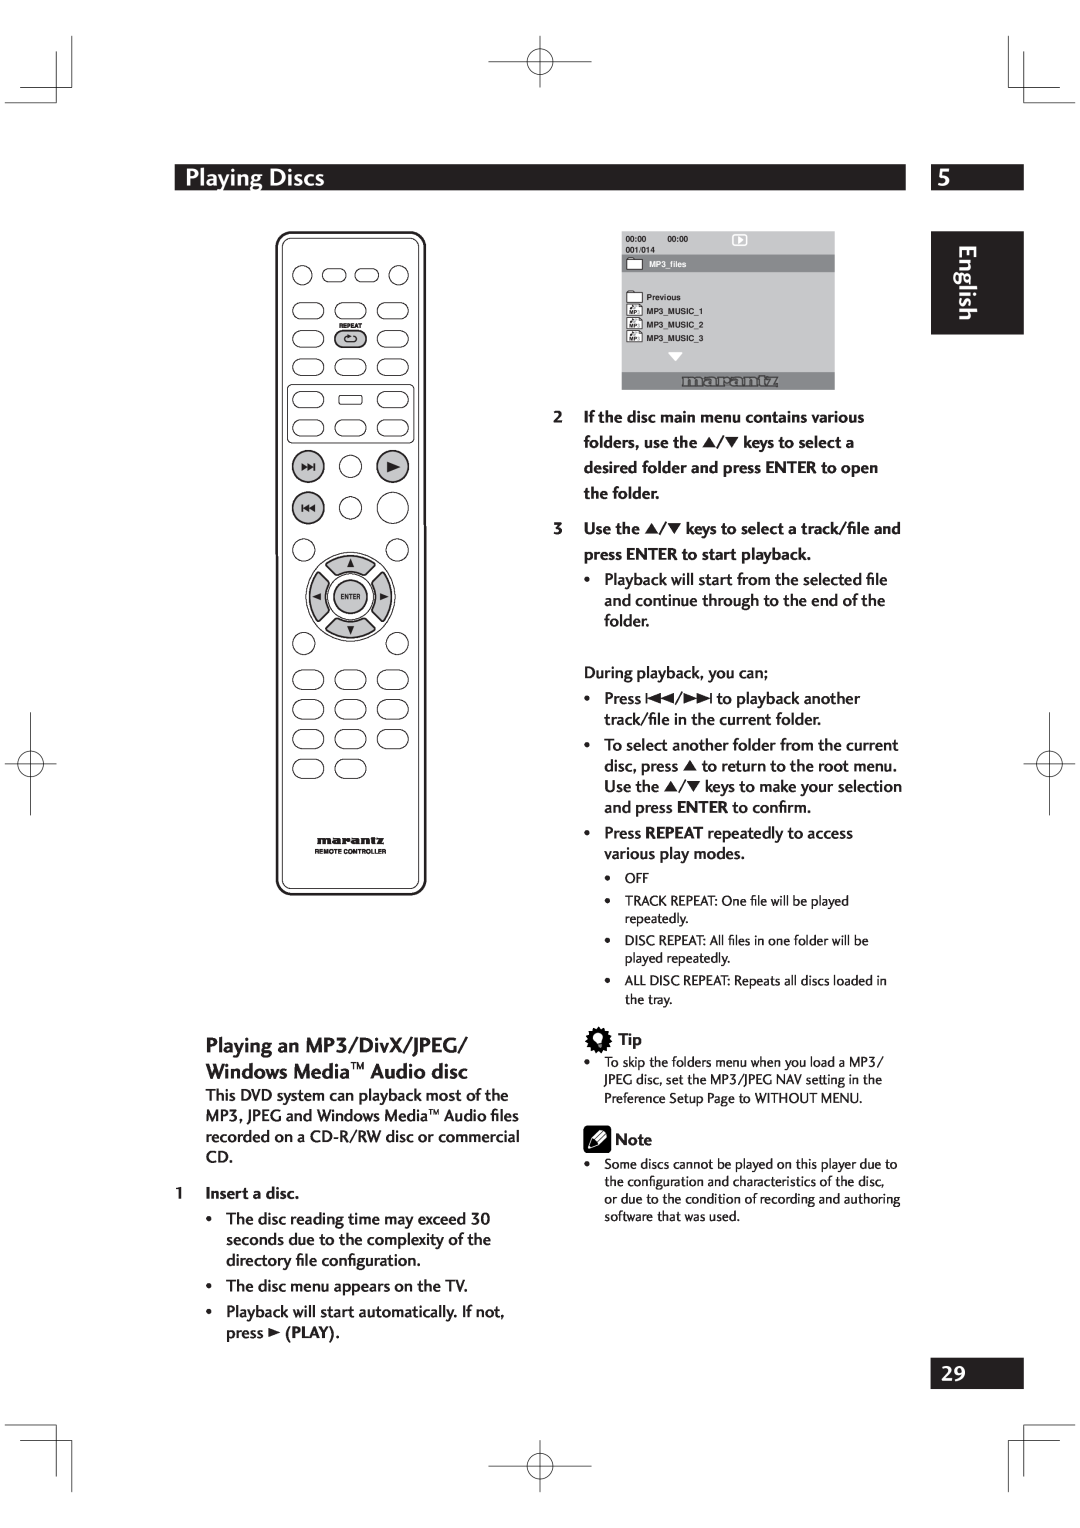 Marantz VC6001 manual Playing an MP3/DivX/JPEG/ Windows Media Audio disc, Insert a disc, Playing Discs, English 